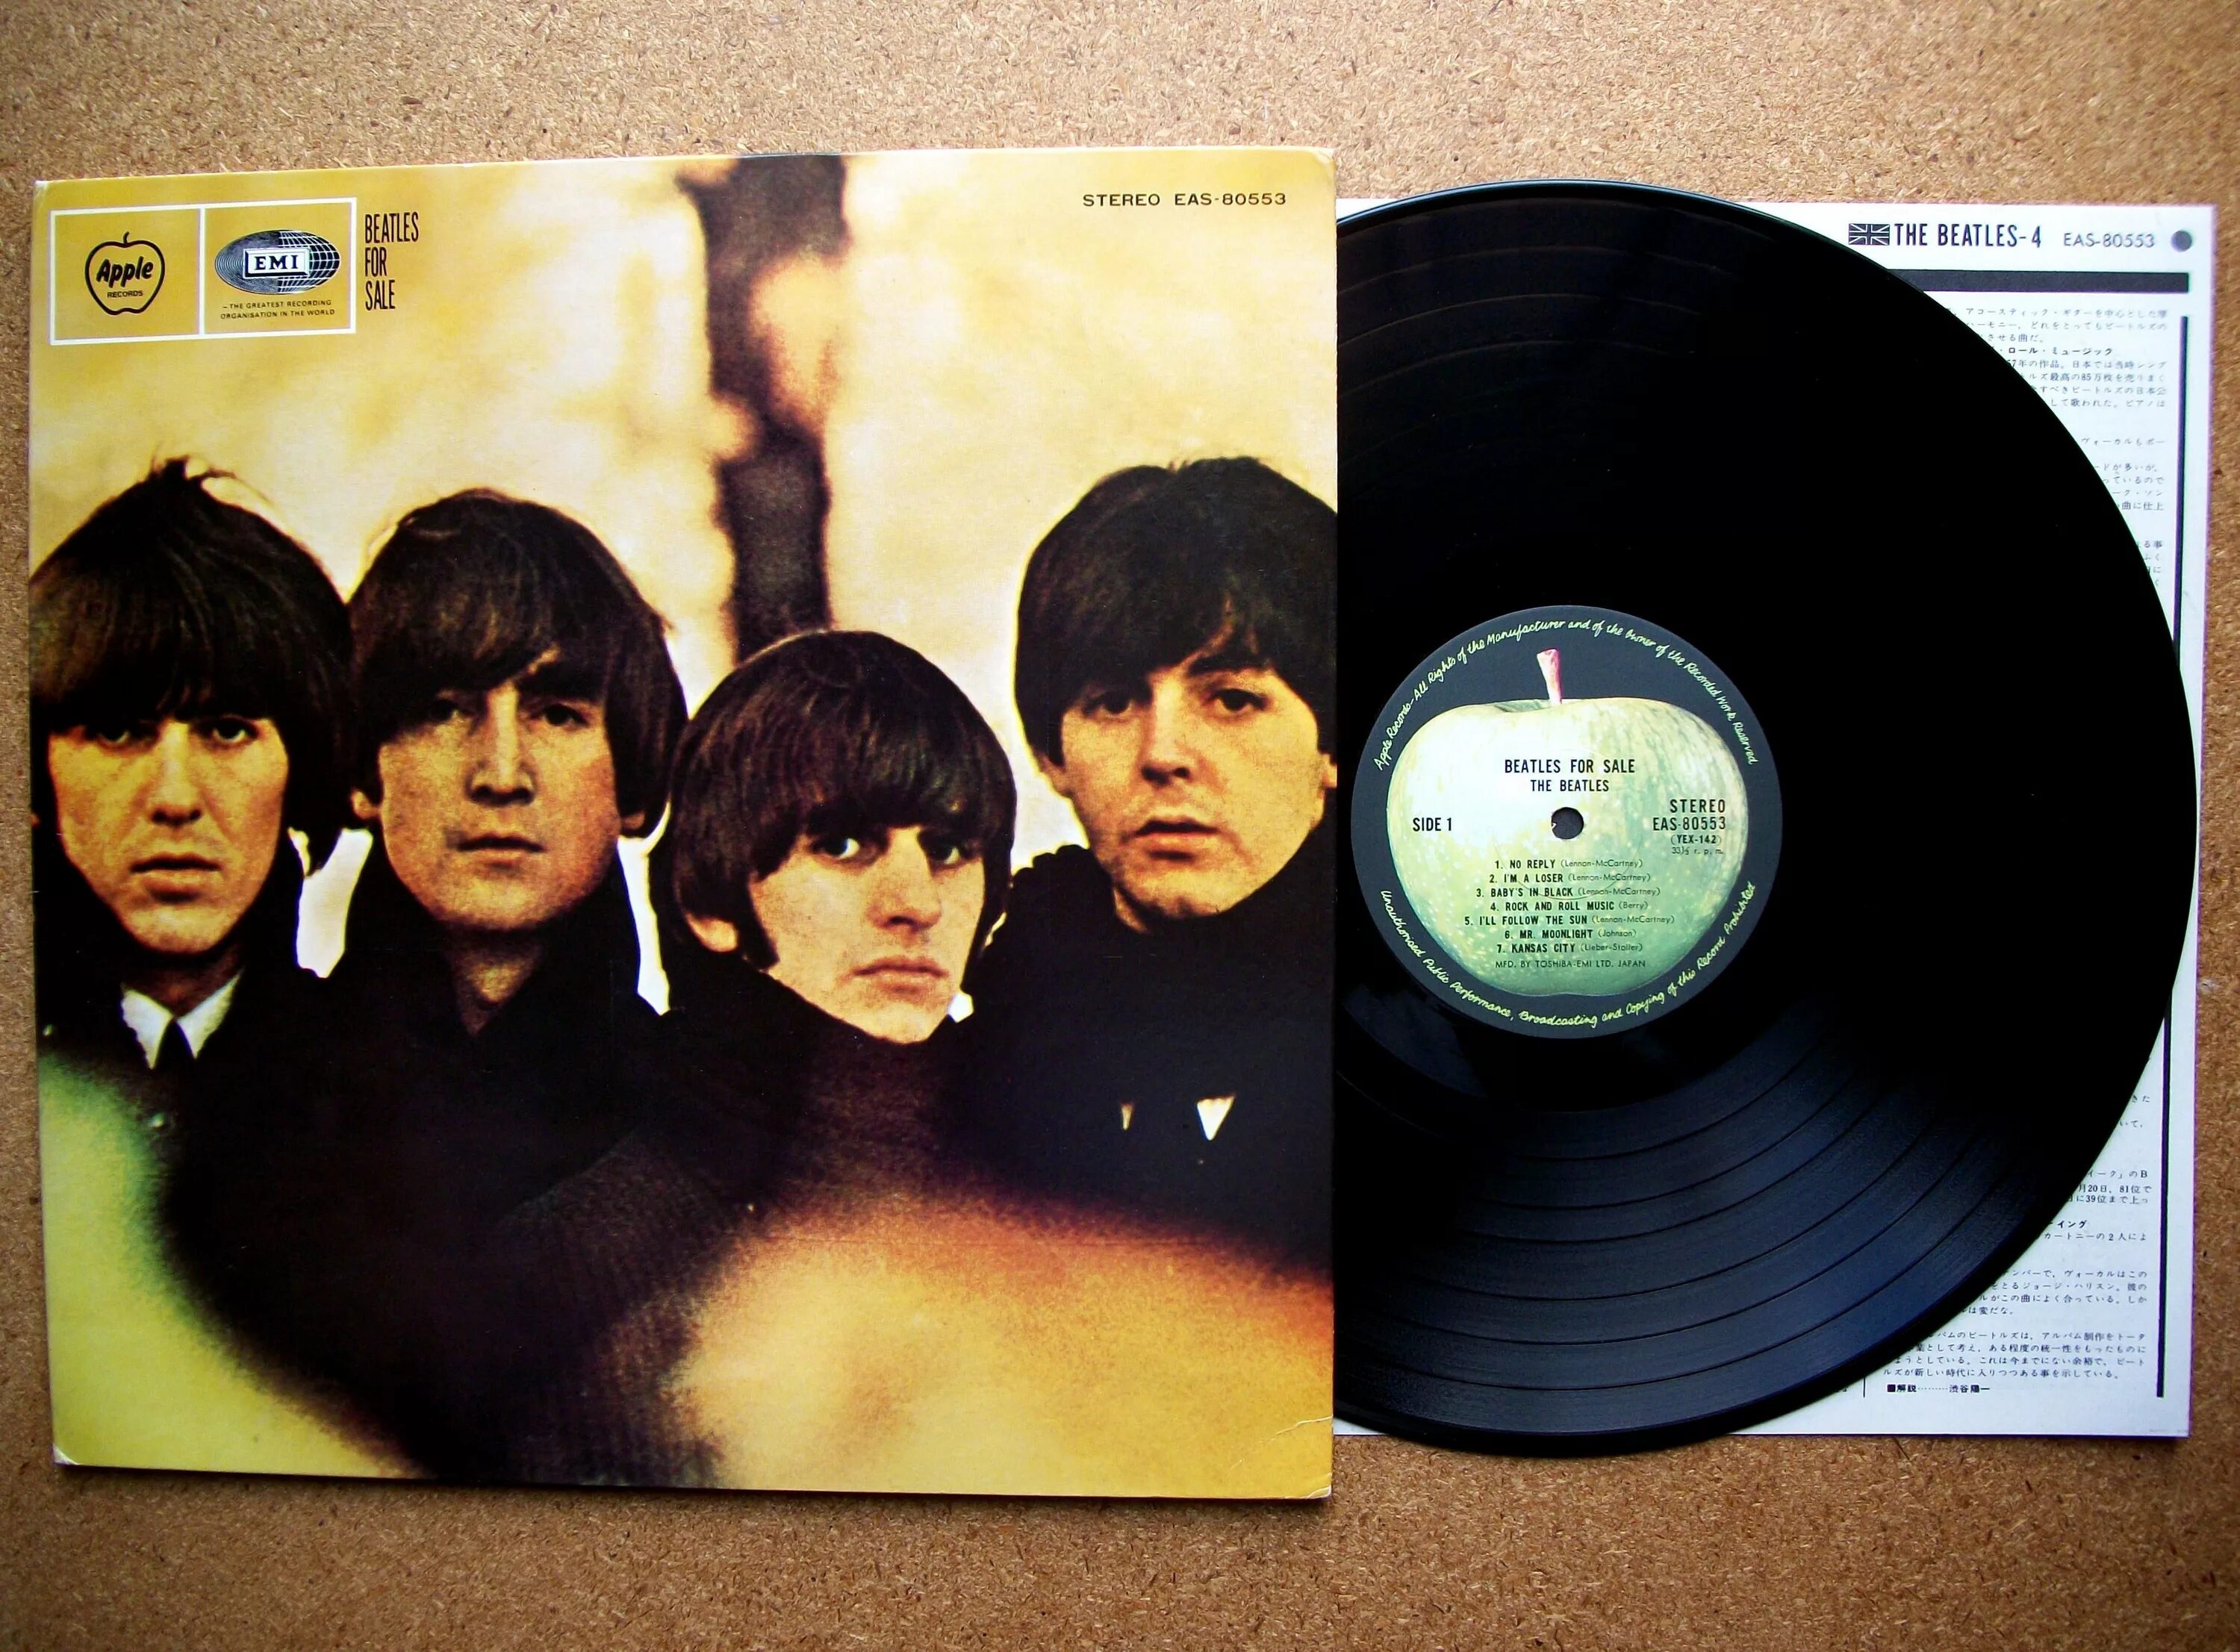 Песни beatles слушать. The Beatles Beatles for sale 1964. The Beatles 1964 альбом. Beatles for sale 1964. Обложка пластинки Beatles.